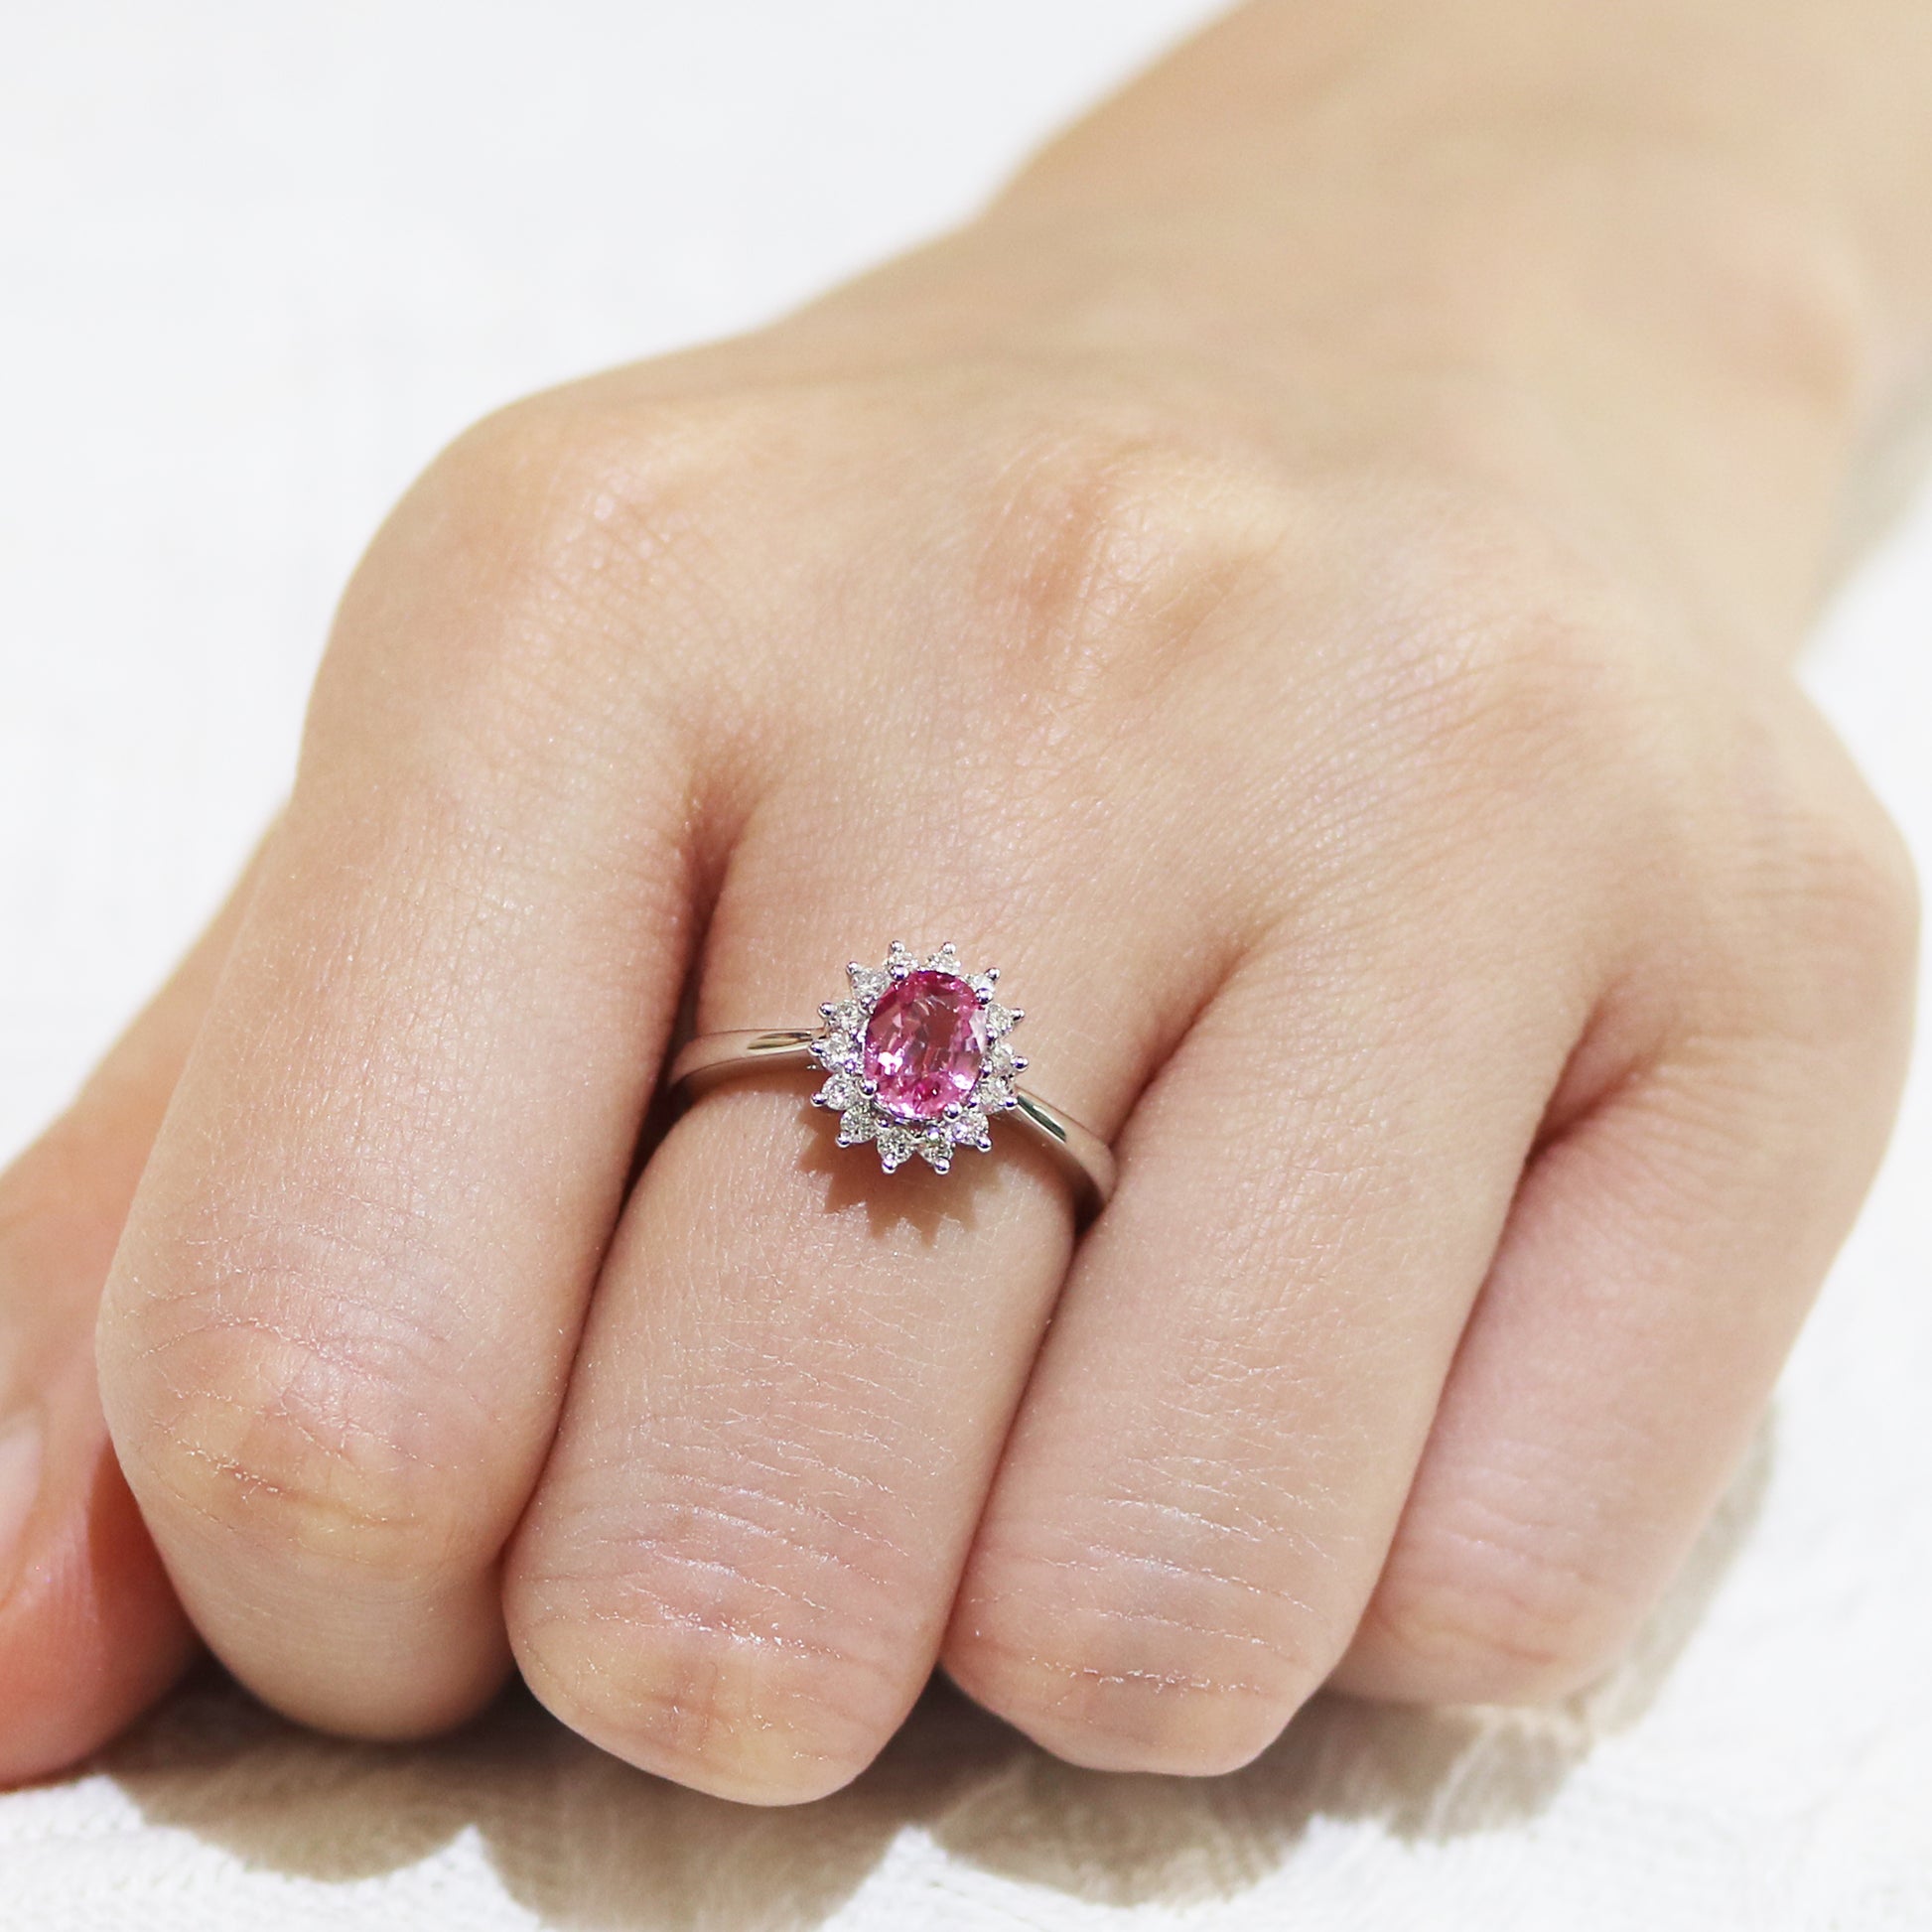  18k白金粉紅藍寶石戒指在中指上18k White Gold Pink Sapphire Ring on middle finger